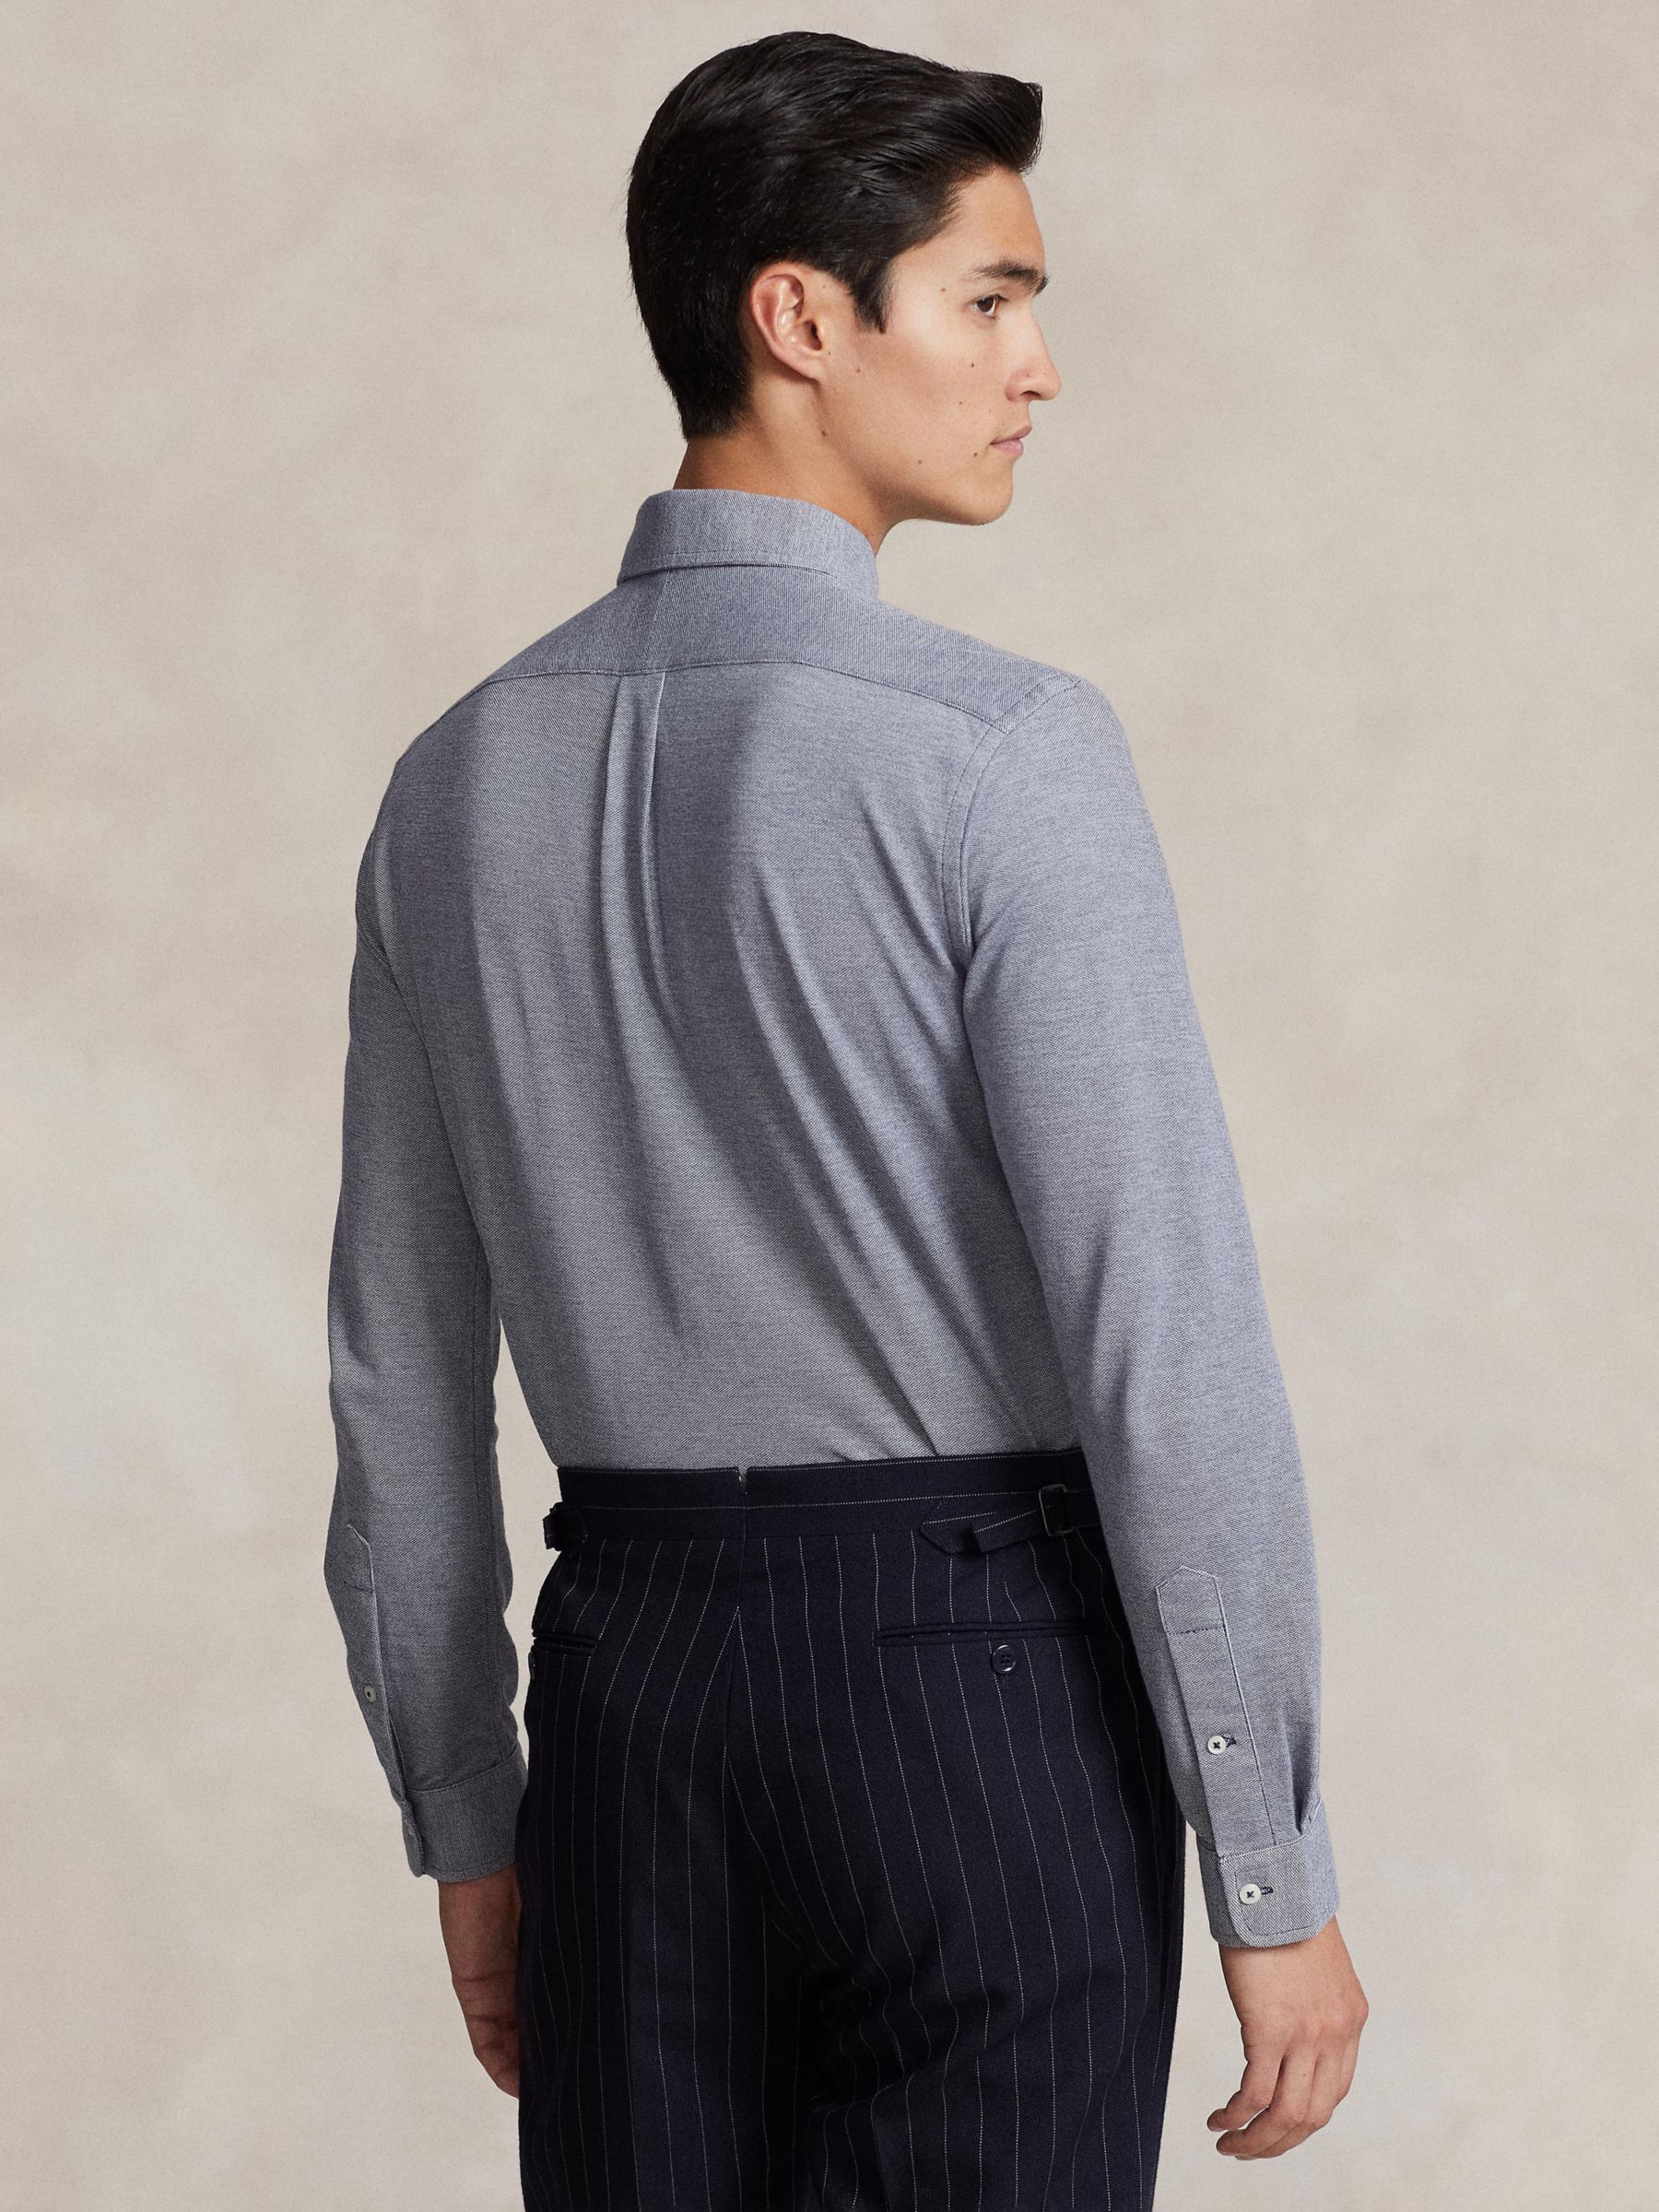 Polo Ralph Lauren Knit Oxford Shirt, Navy at John Lewis & Partners